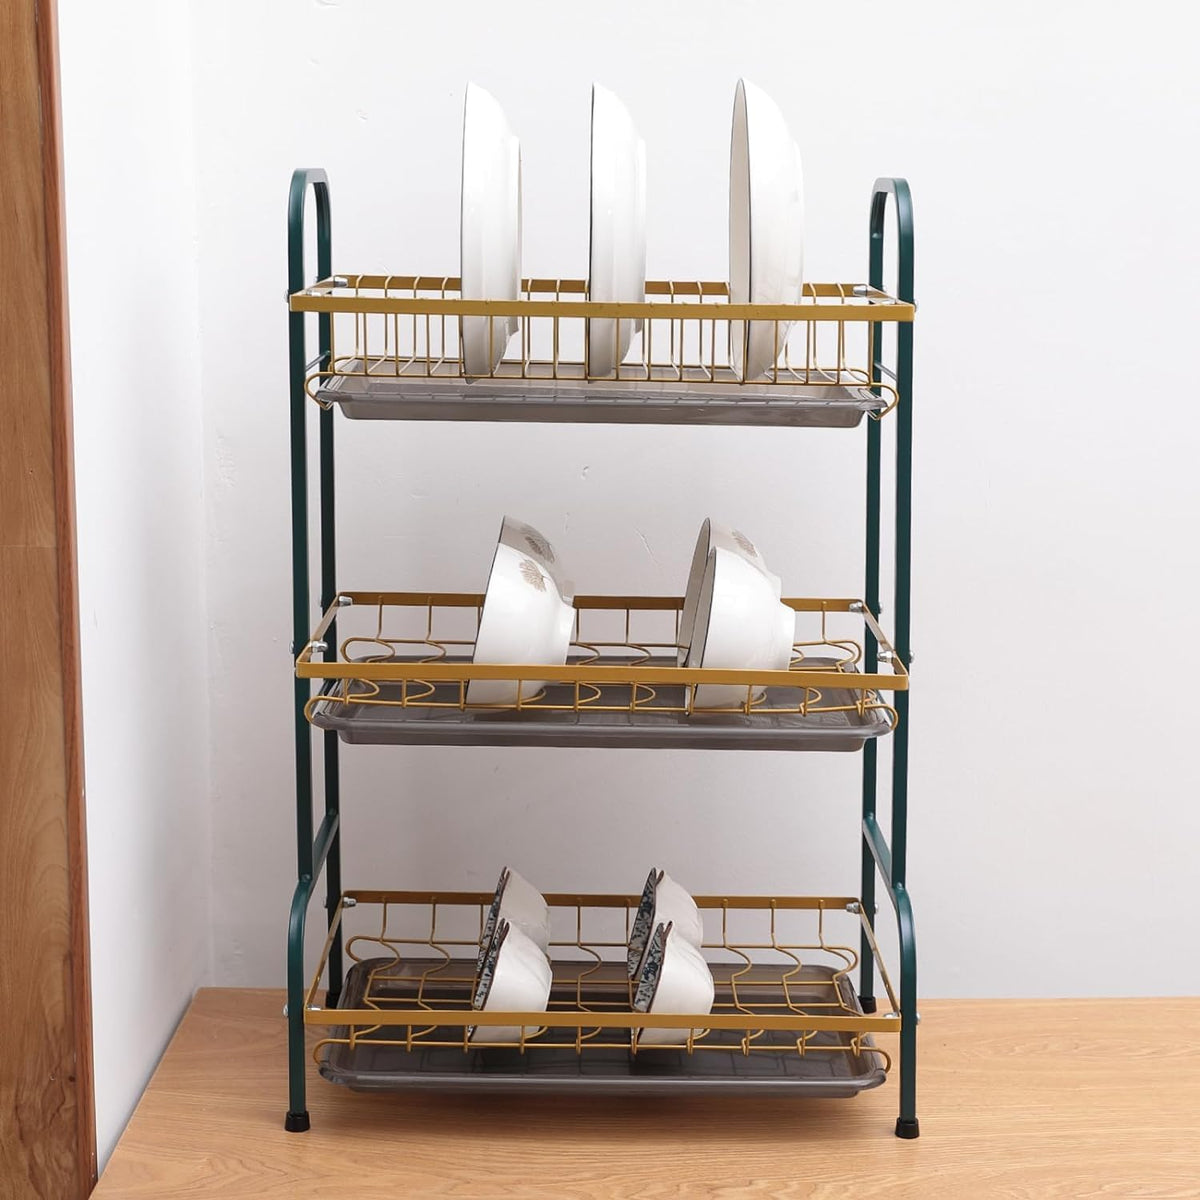 Plantex 3-Layer Dish Drying Rack|Storage Rack for Kitchen Counter|Drainboard & Cutting Board Holder|Premium Utensils Basket (Dark Green & Gold)